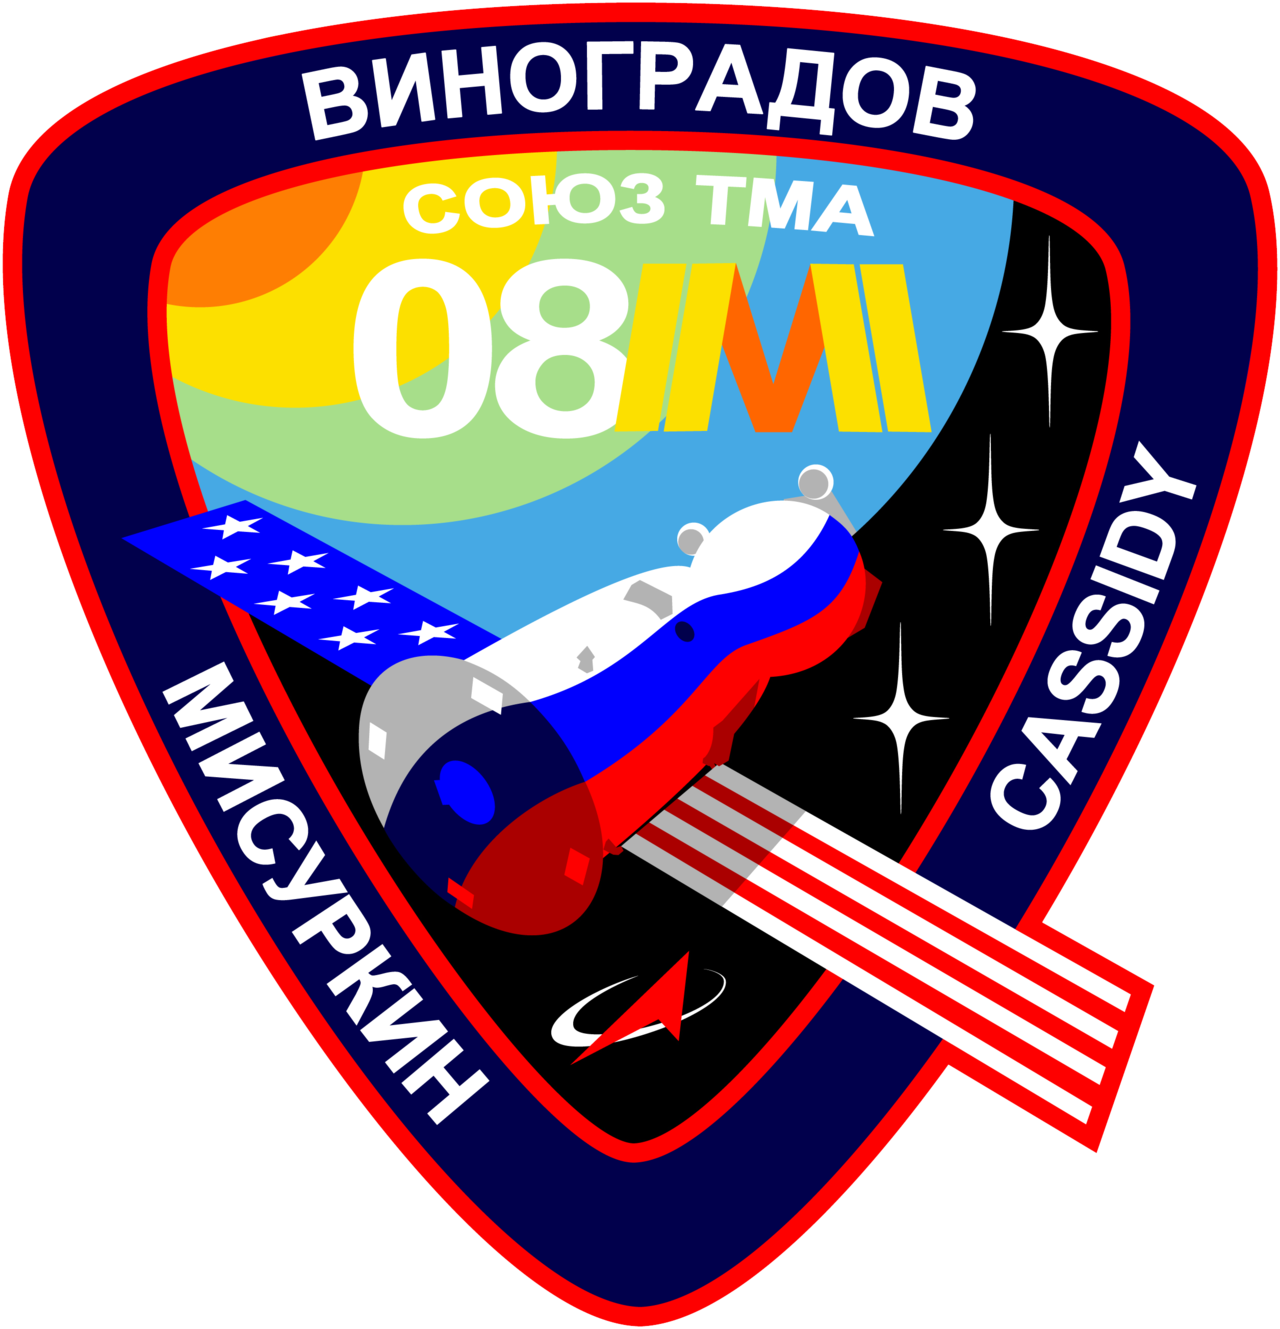 Mission patch for Soyuz TMA-08M